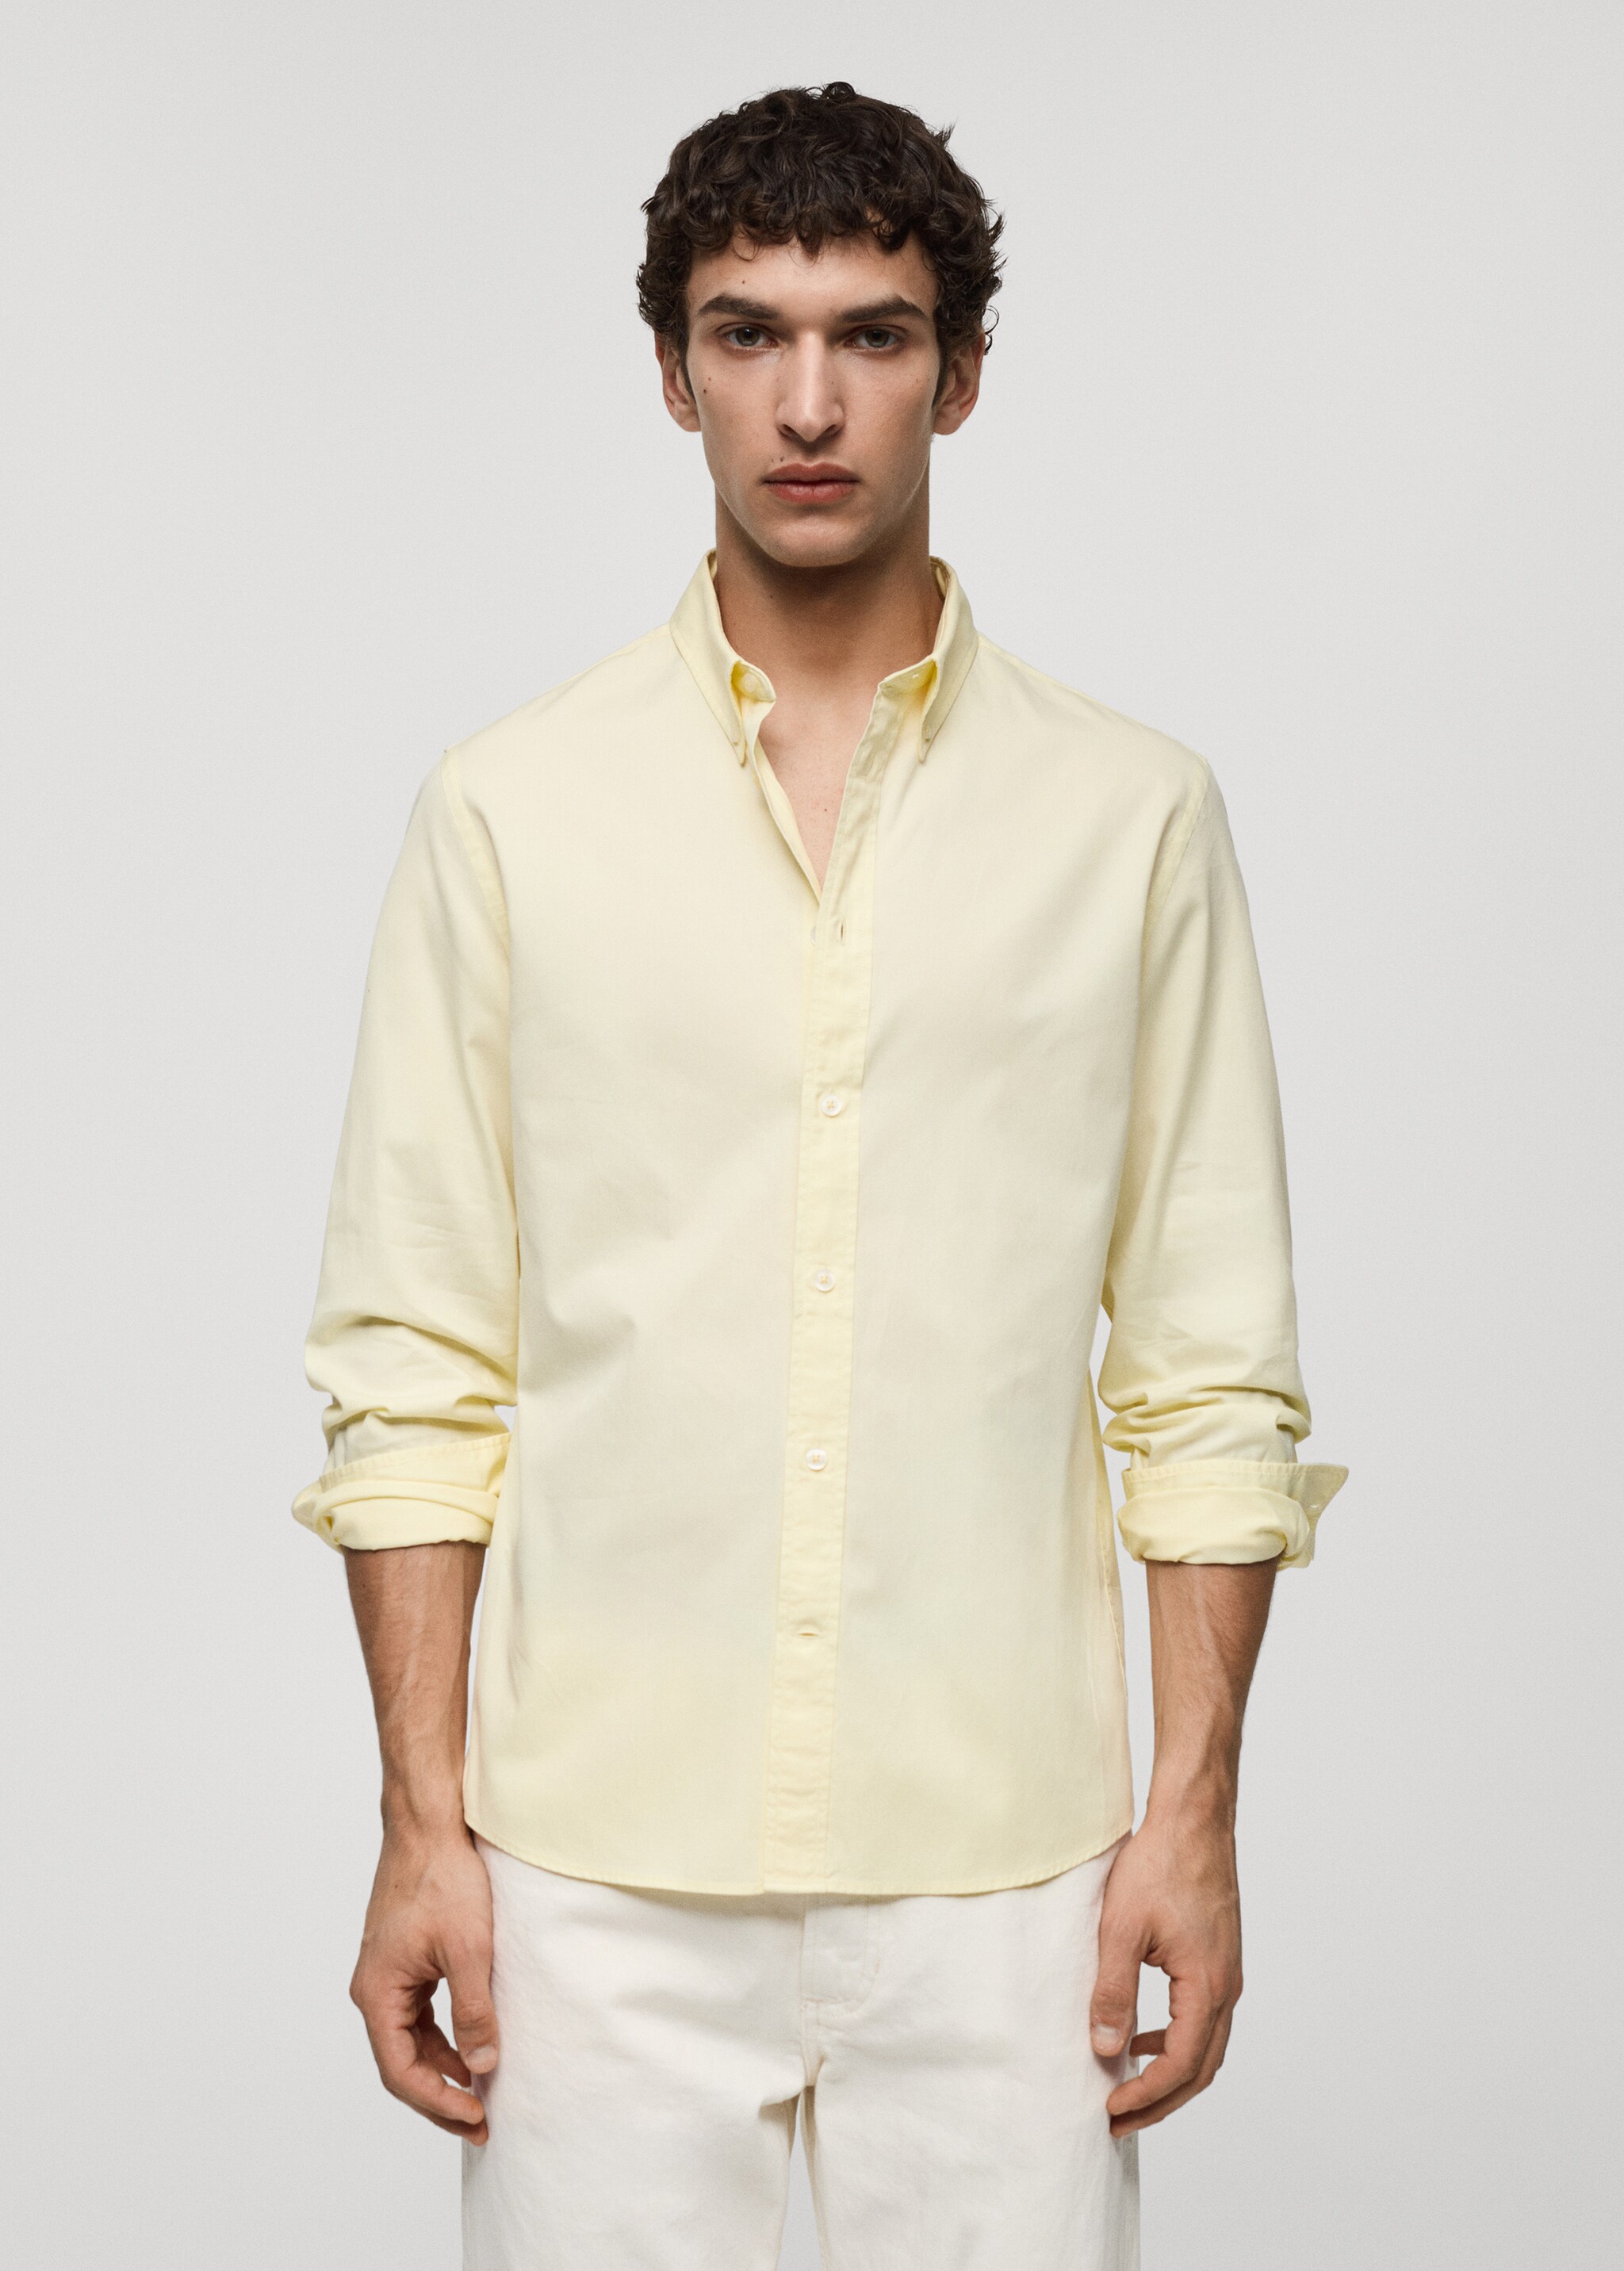 100% cotton regular-fit shirt - Medium plane